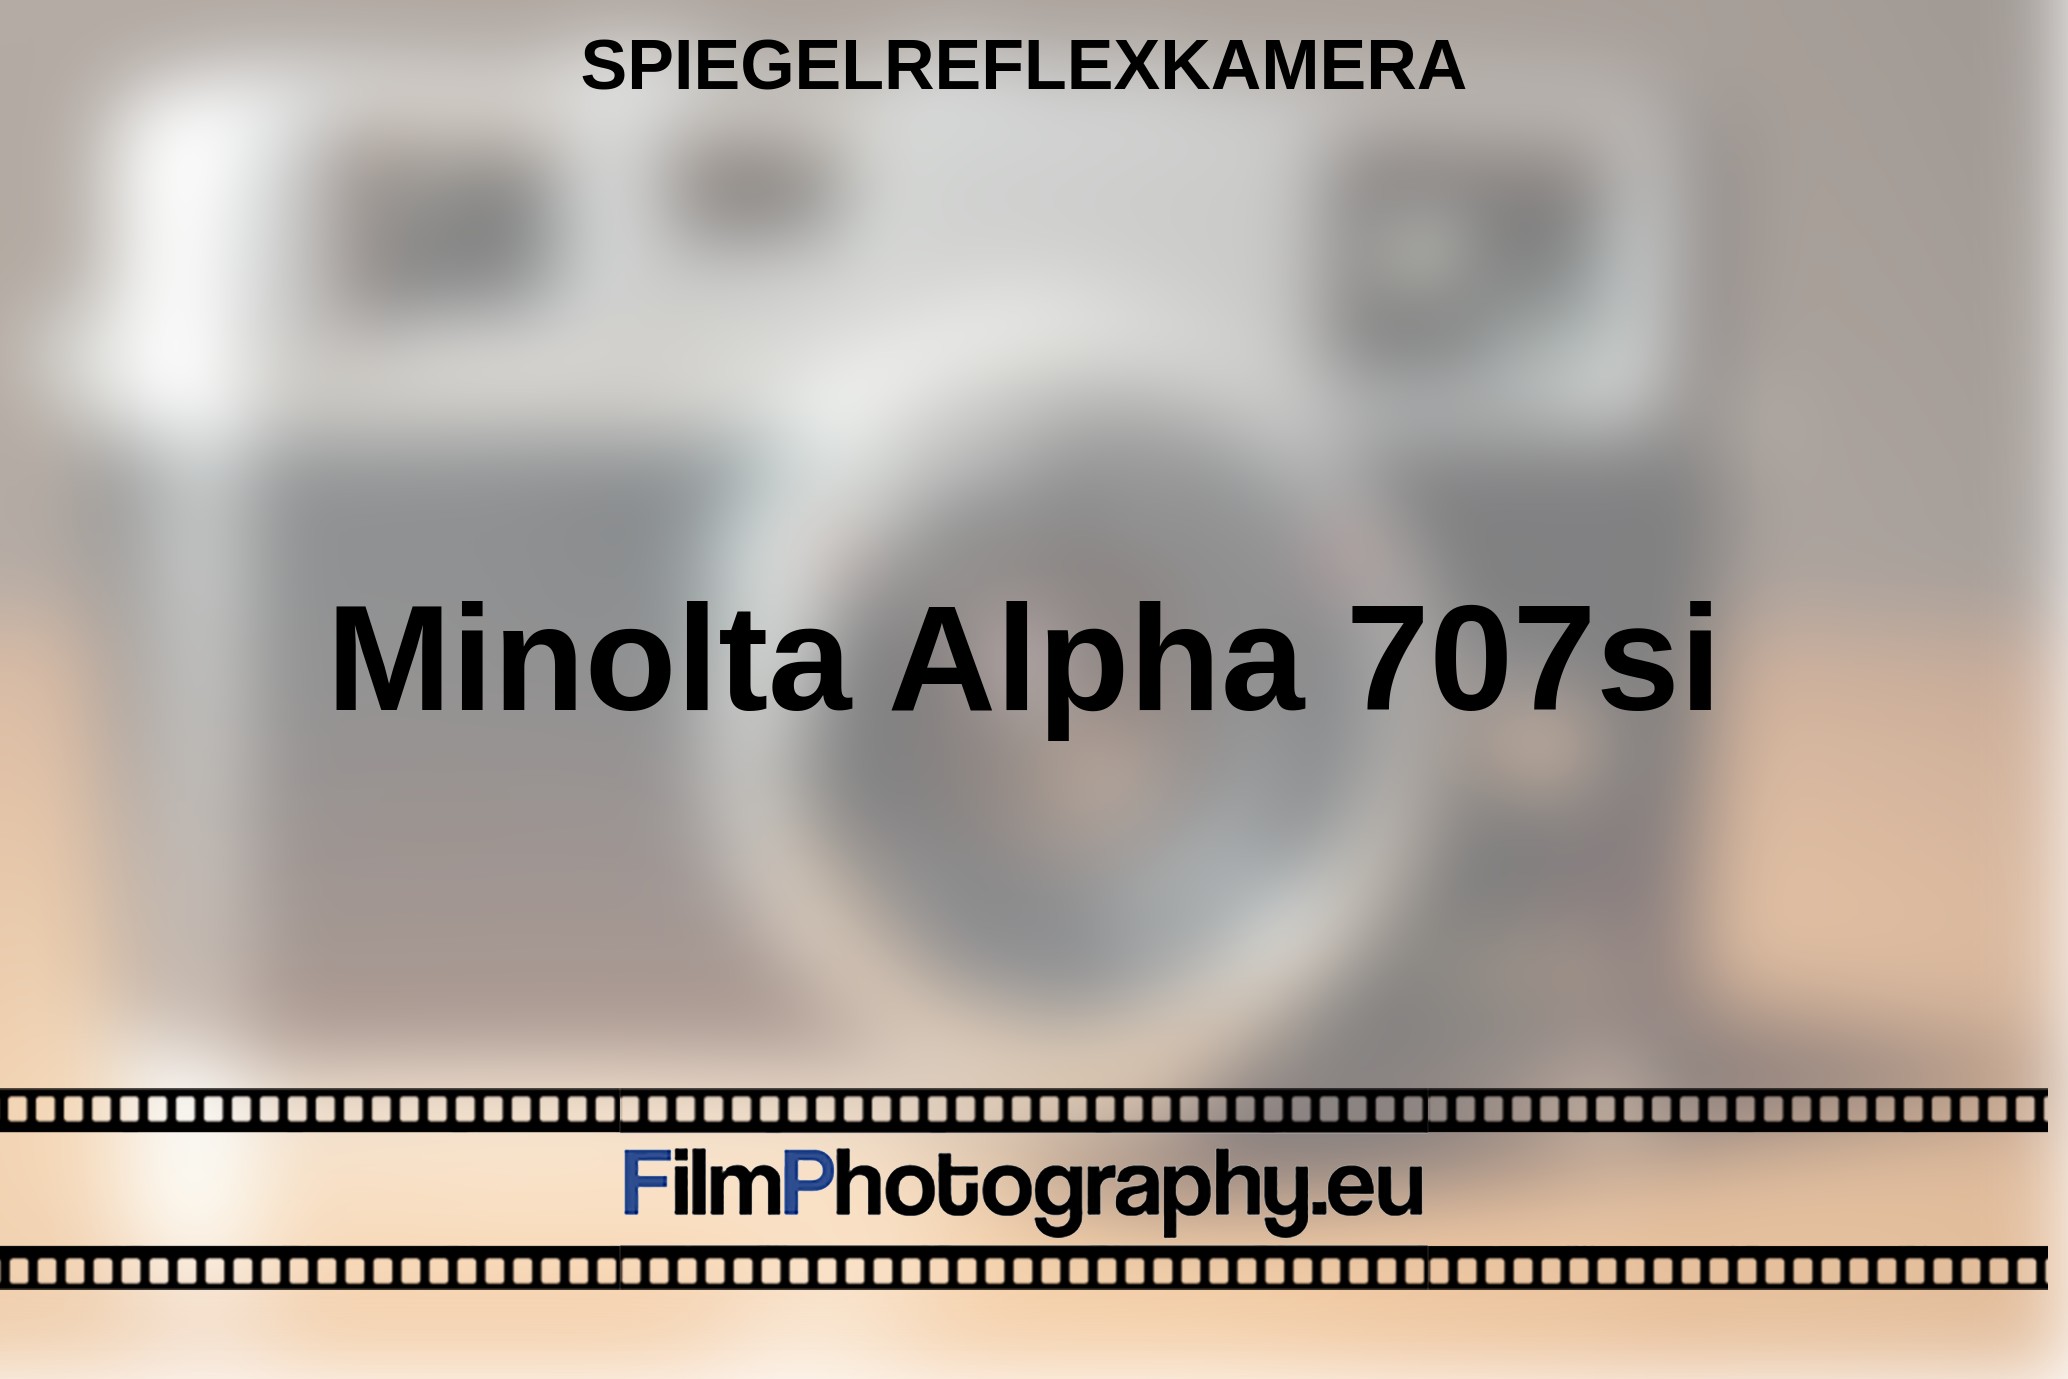 Minolta-Alpha-707si-Spiegelreflexkamera-bnv.jpg